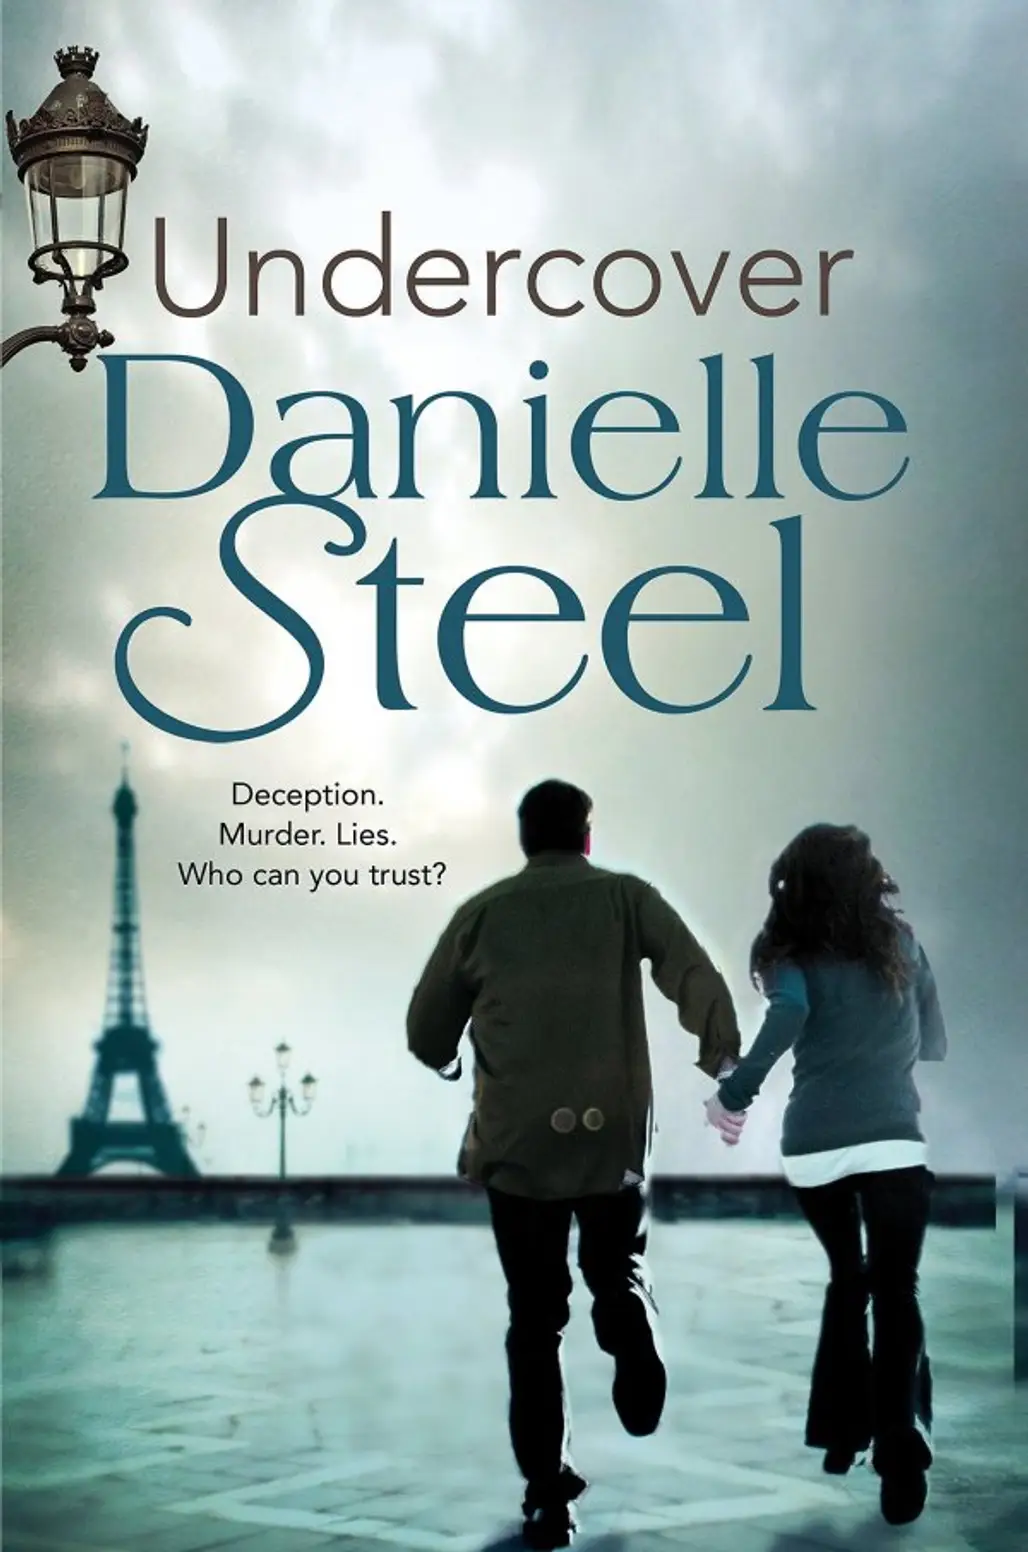 Undercover by Danielle Steel